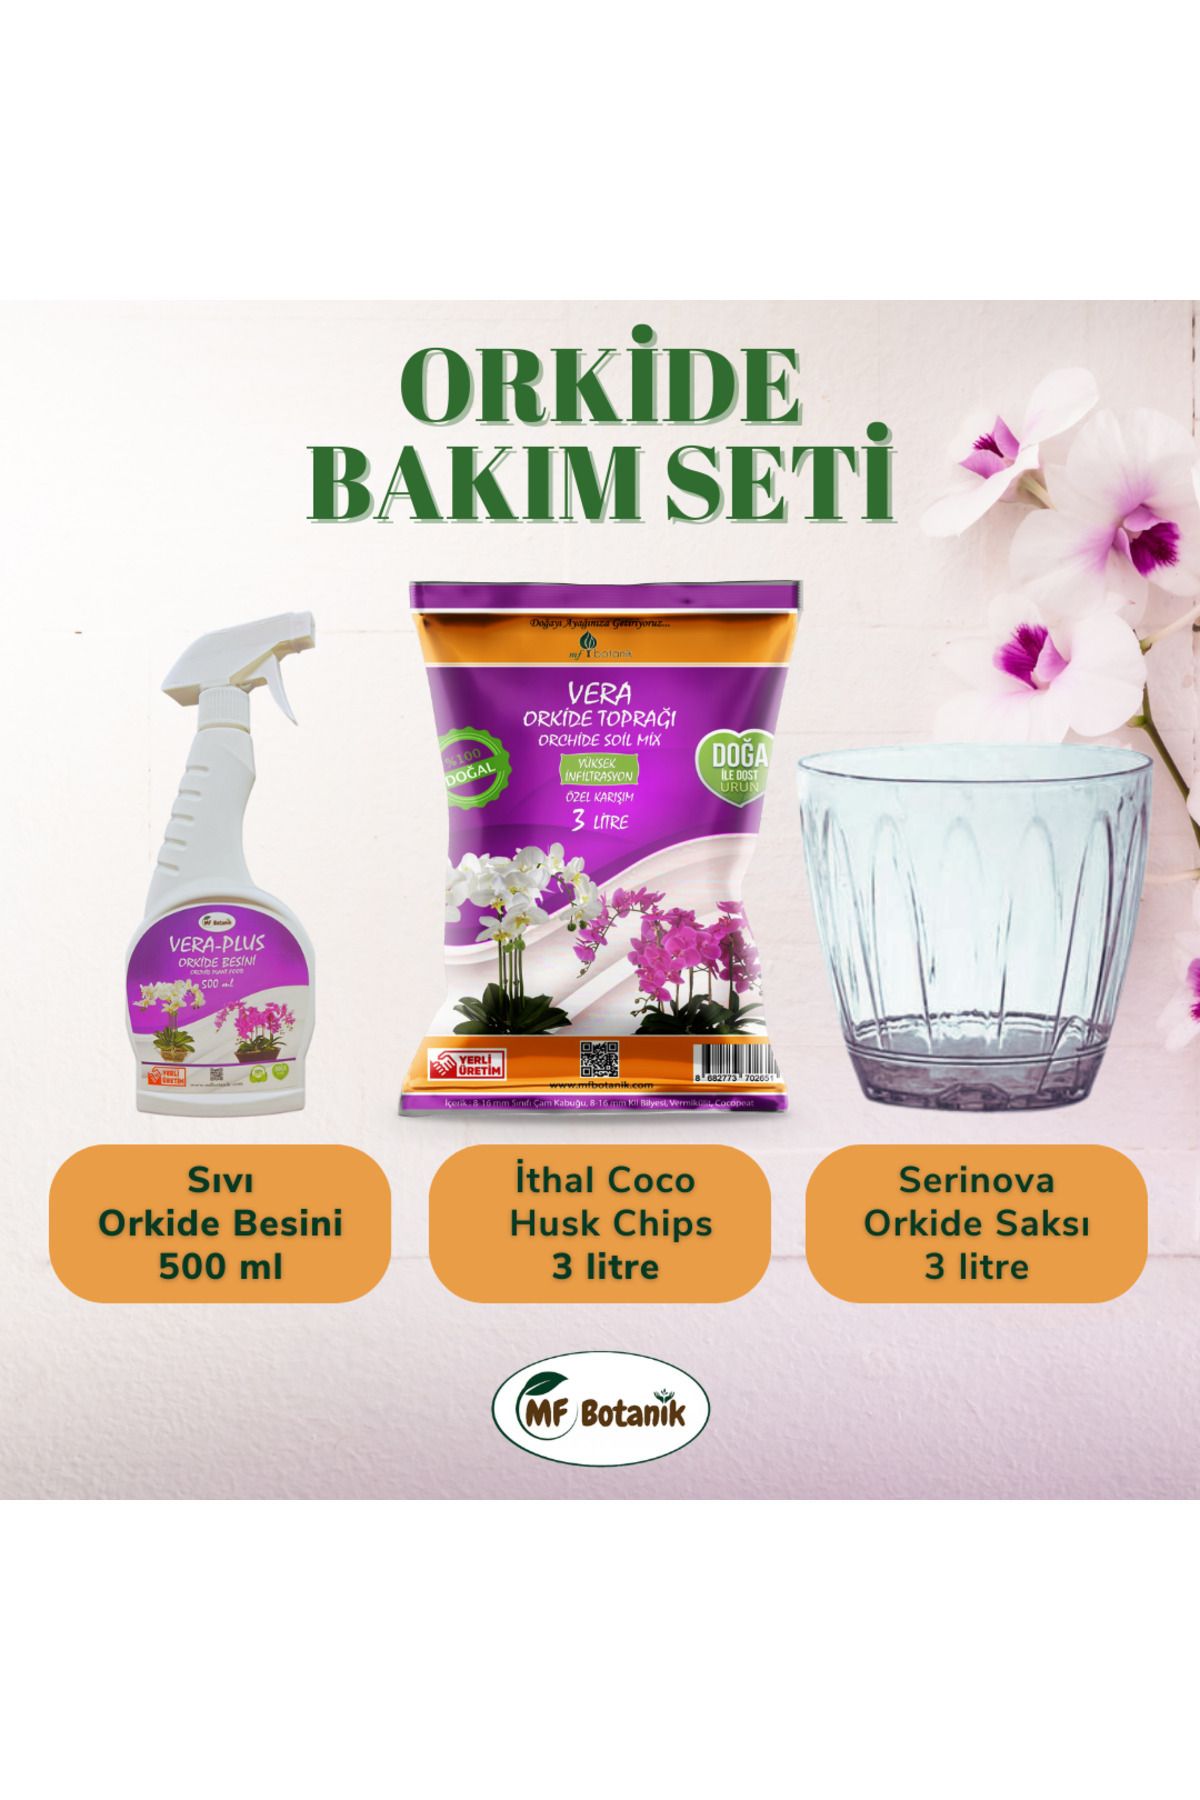 MF Botanik Orkide Saksı - Vera 3 Lt Orkide Toprağı - Vera-plus Orkide Sıvı Bitki Besini 500 ml